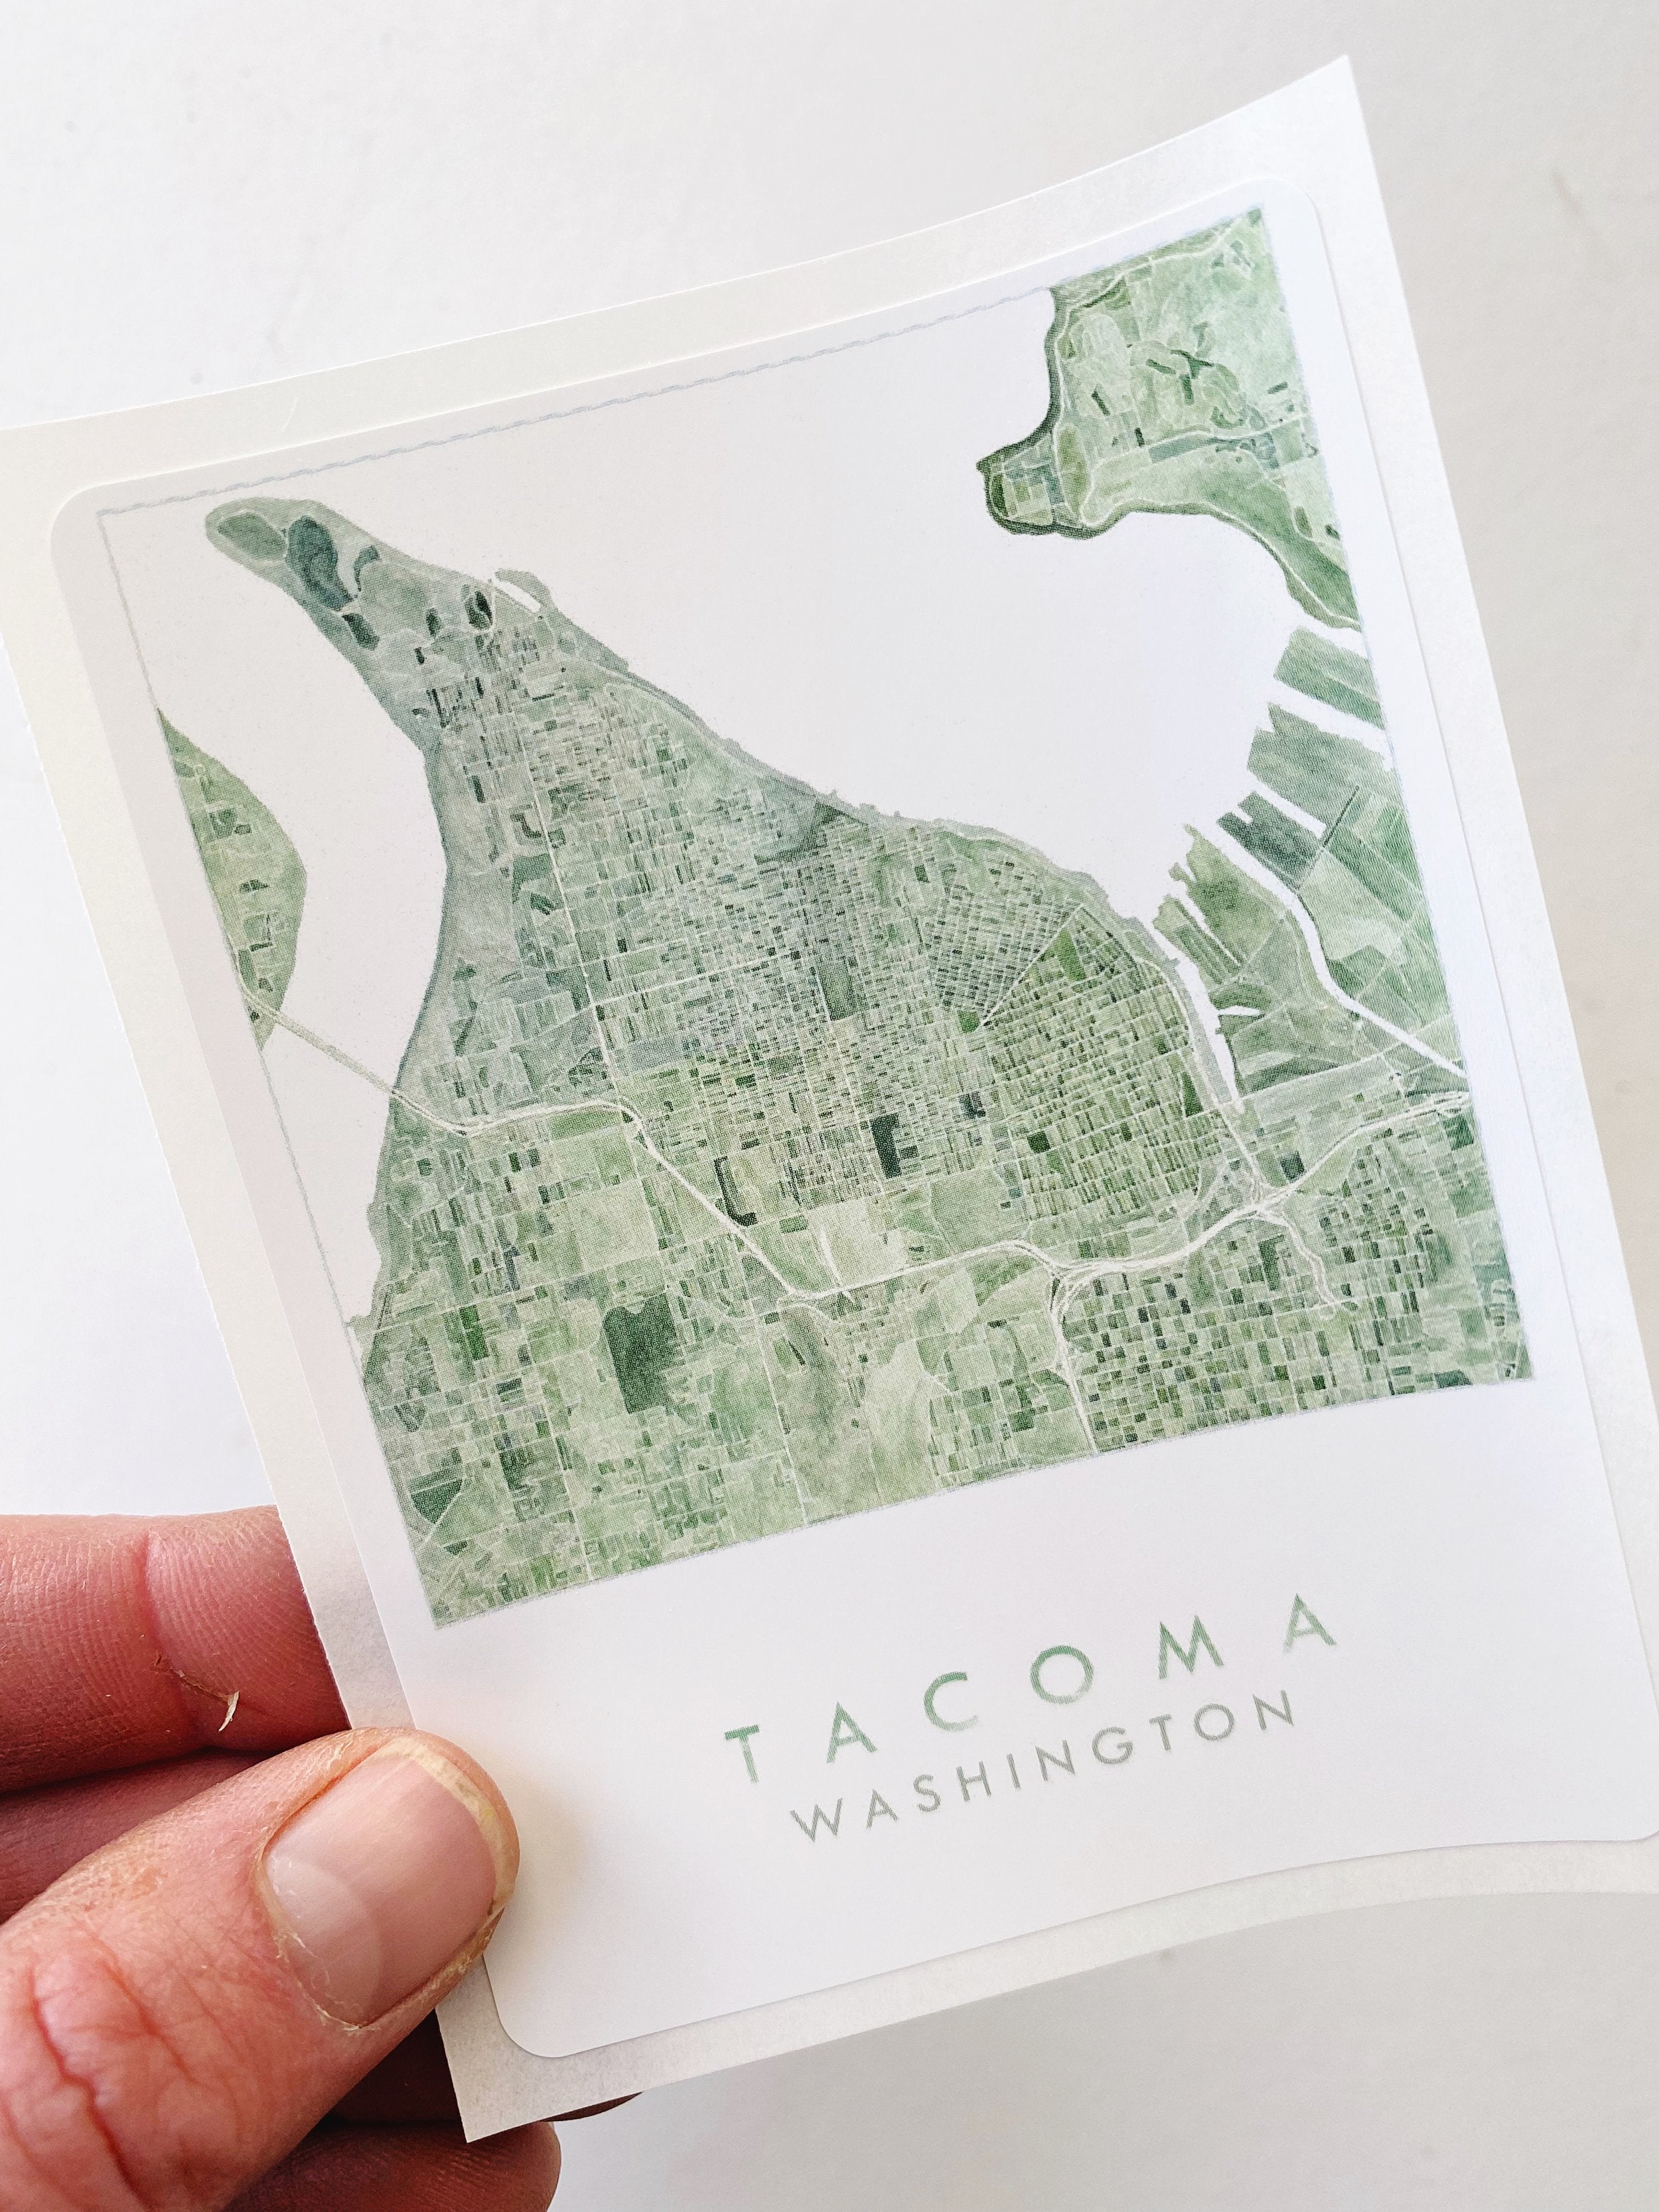 TACOMA Washington Map Sticker